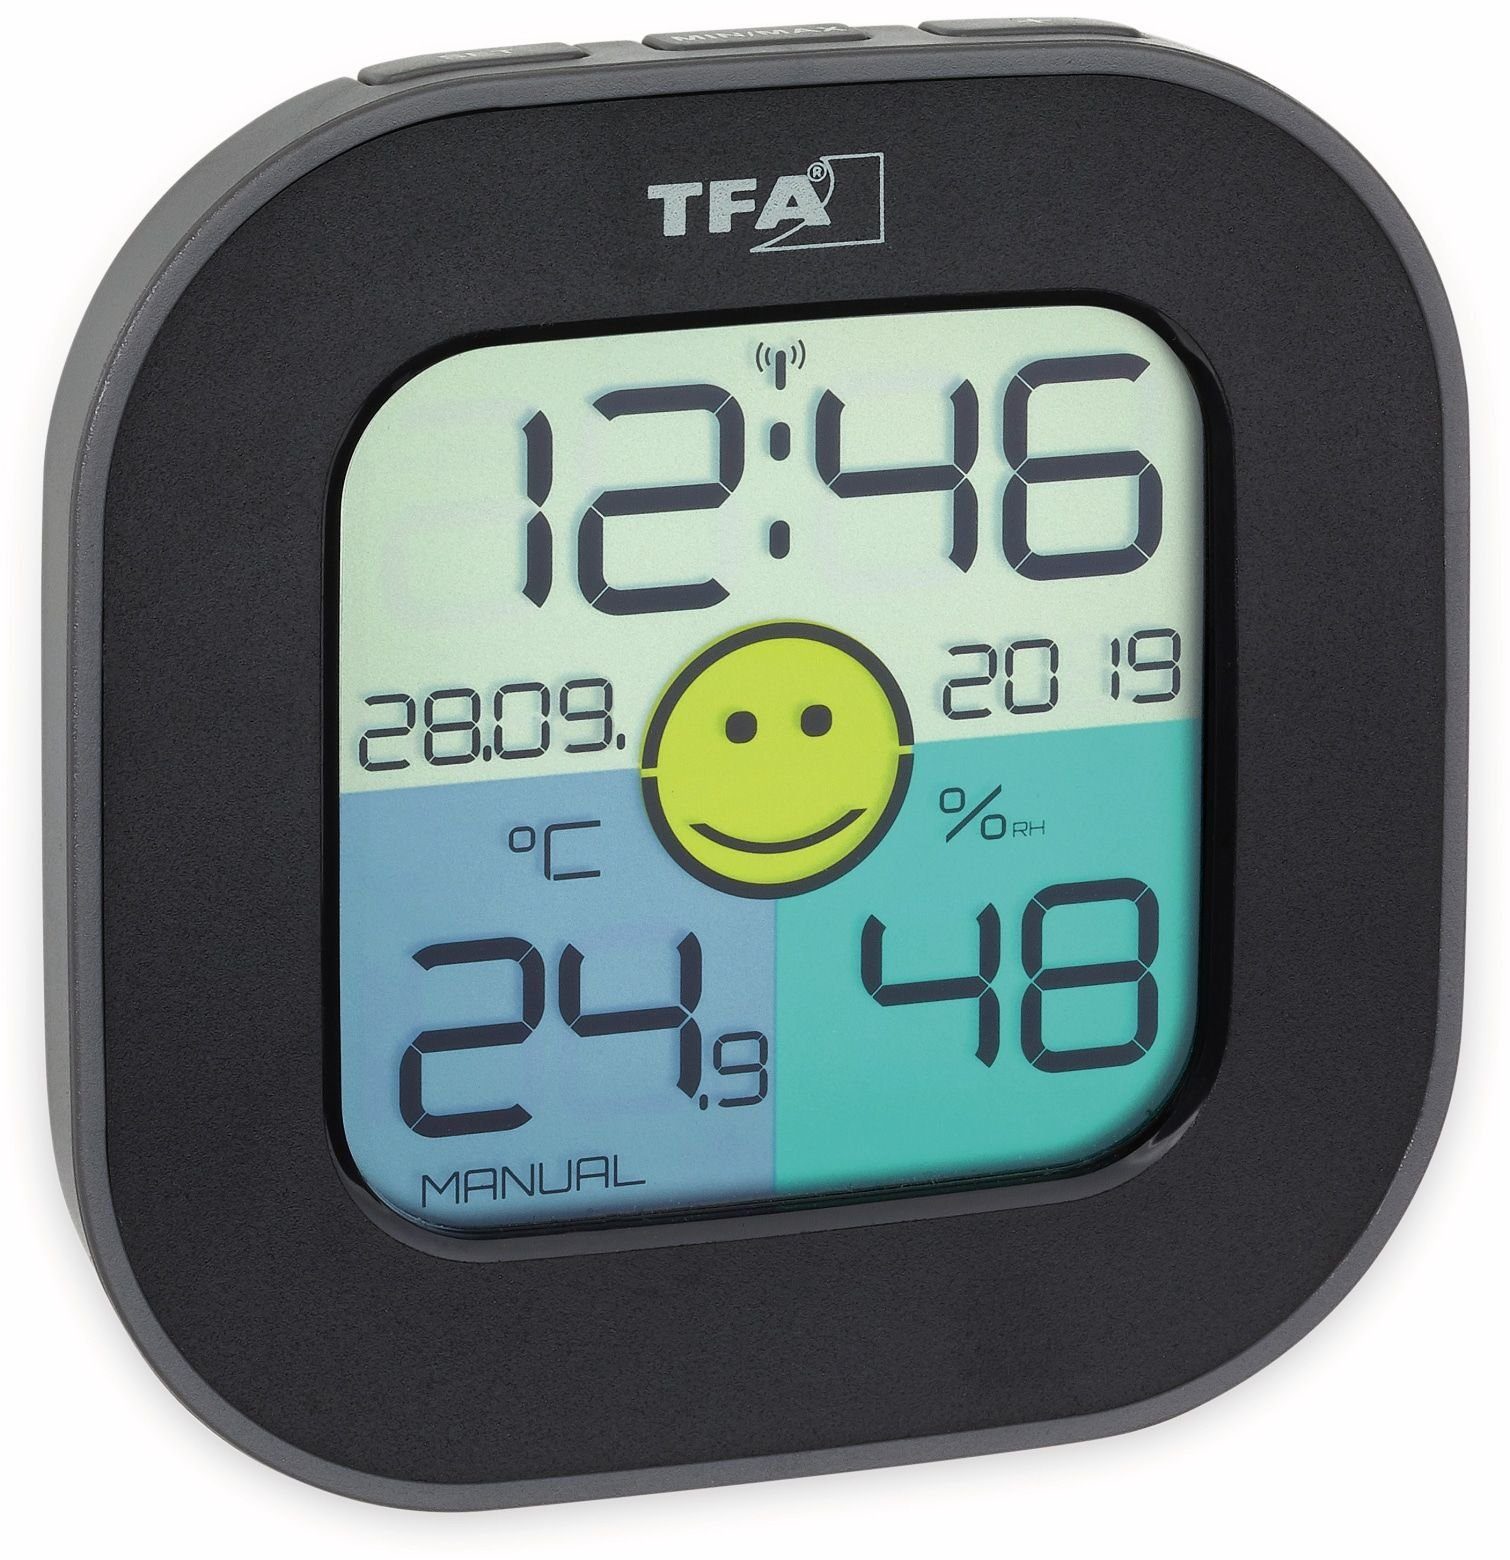 TFA Dostmann Tfa Badethermometer TFA Digitales Fun, 30.5050.01 schwarz Thermo-Hygrometer